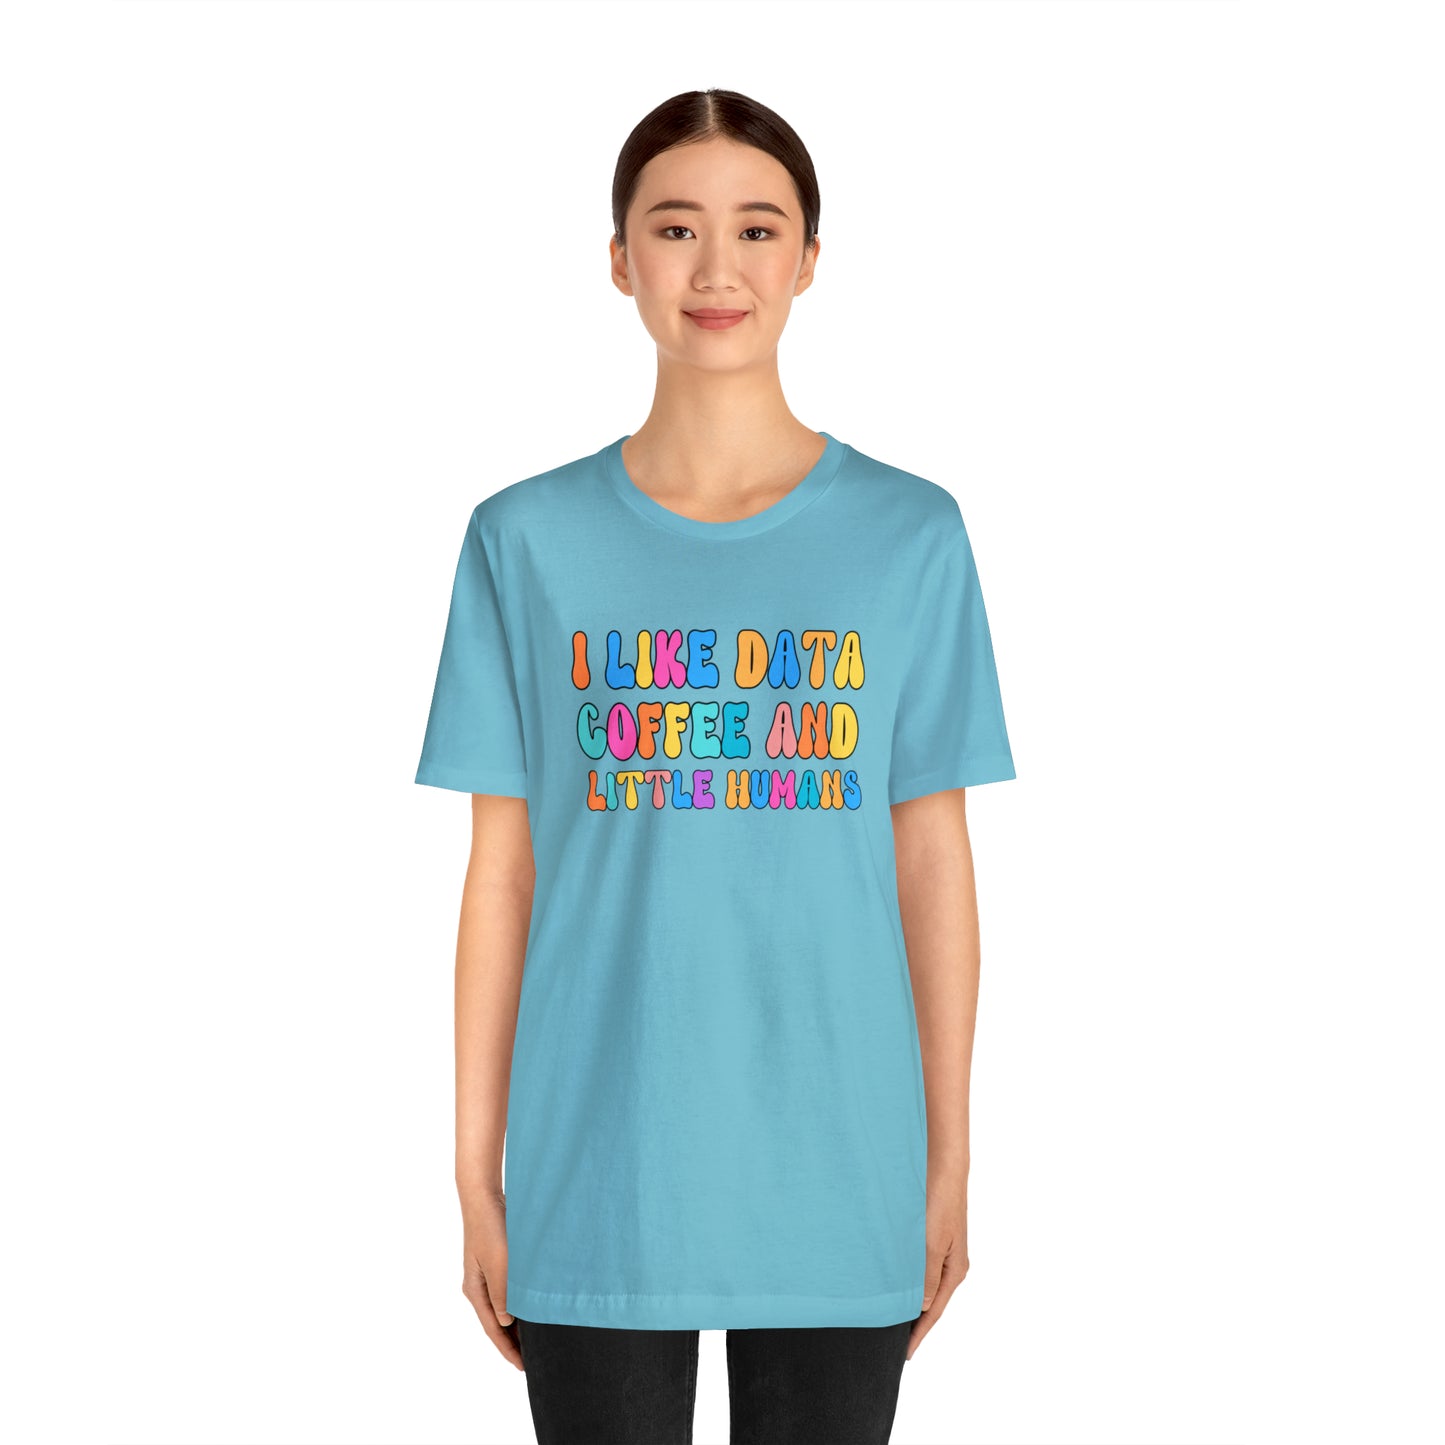 Sped Teacher Shirt, Applied Behavior Analysis Shirt, Physical Therapy Shirt, Physical Therapy Gifts, Physical Therapist Gift, T182